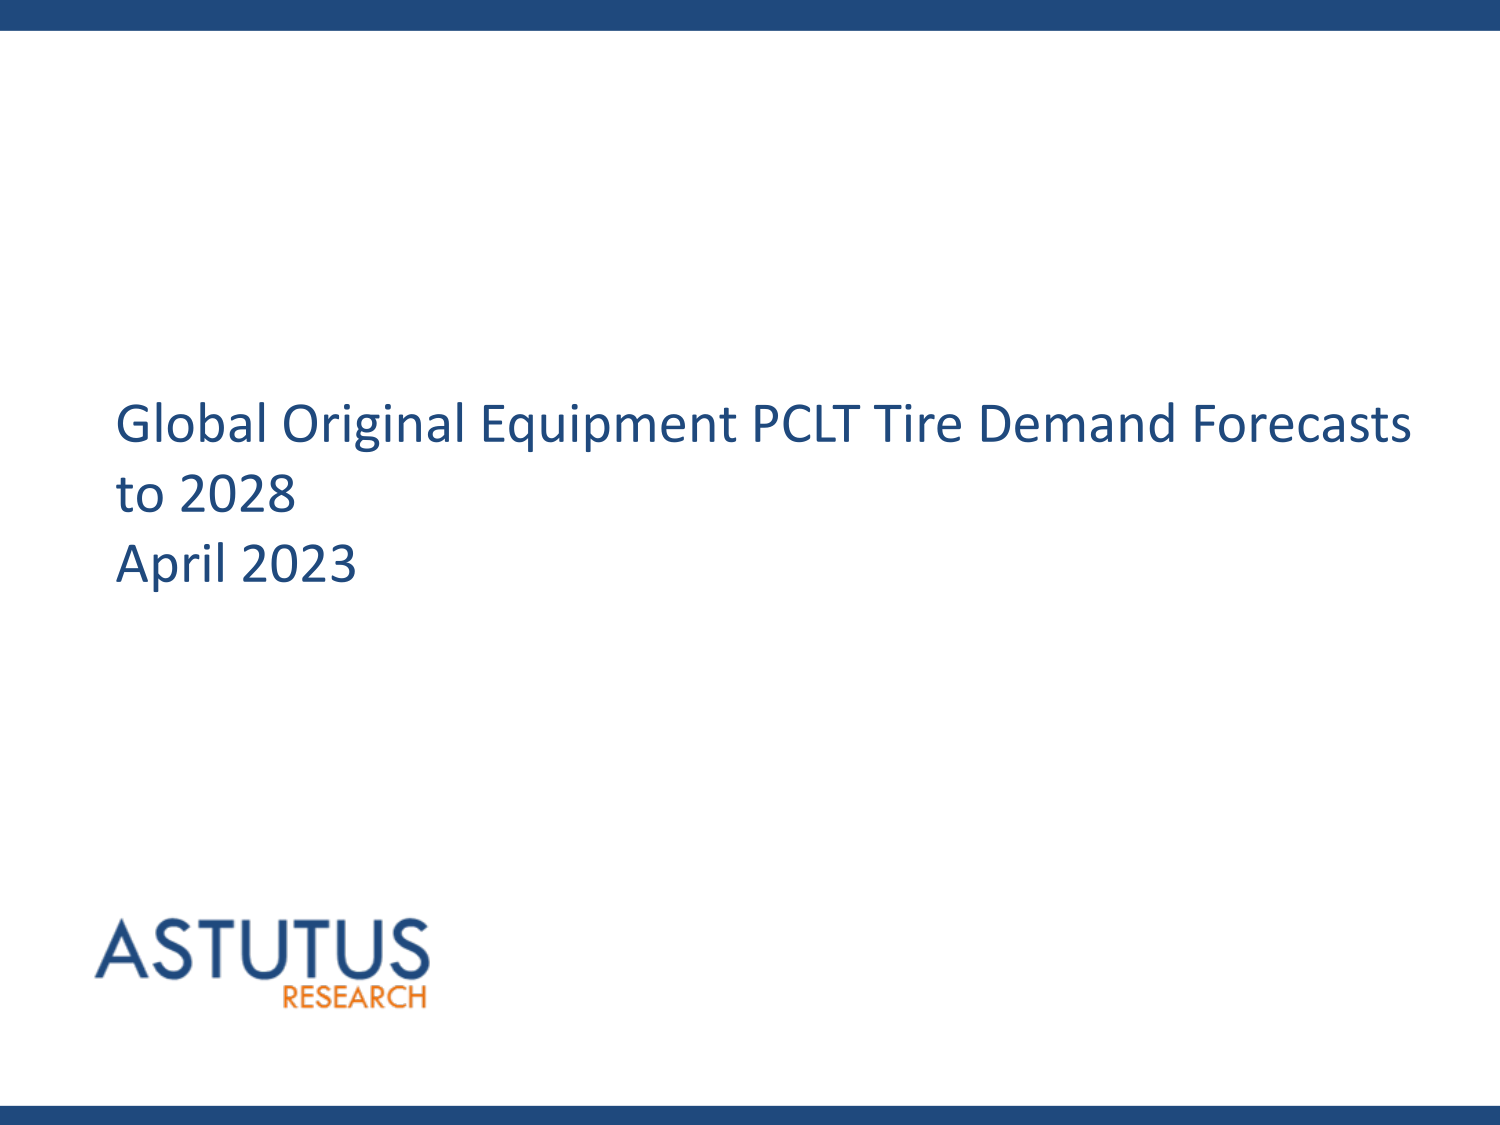 Global Original Equipment PCLT Tire Market Forecasts to 2028